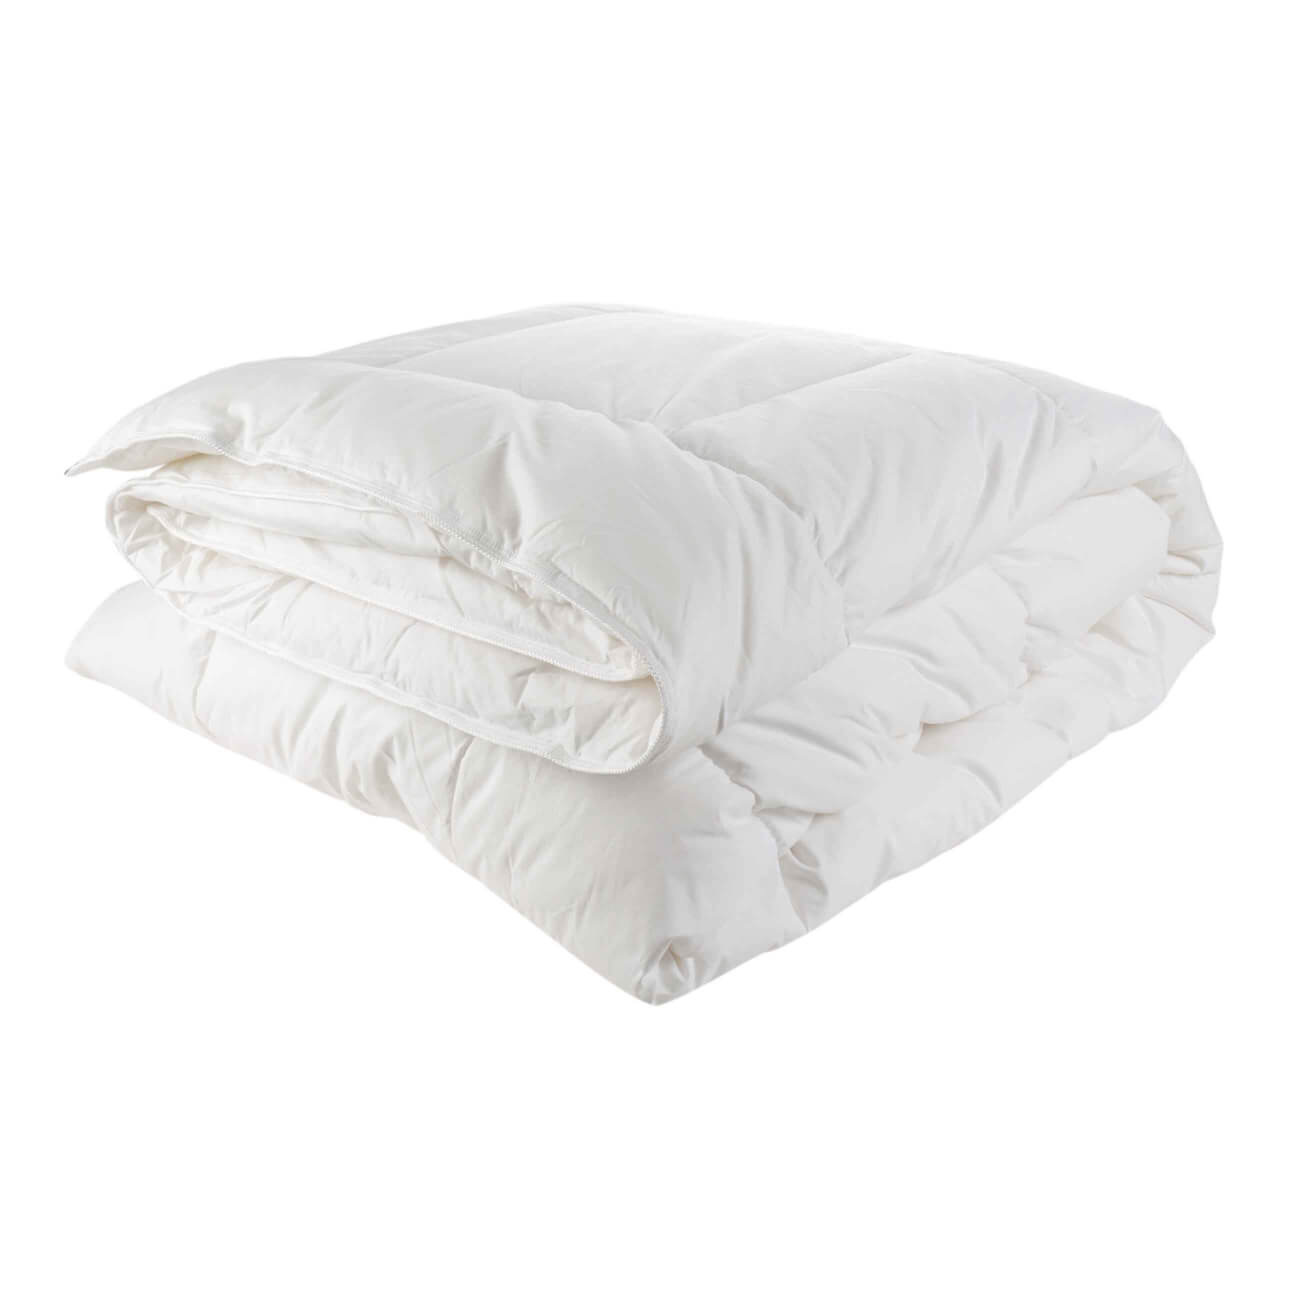 Одеяло, 200х220 см, хлопок/микрофибра, Soft cotton одеяло 140х200 см микрофибра super soft